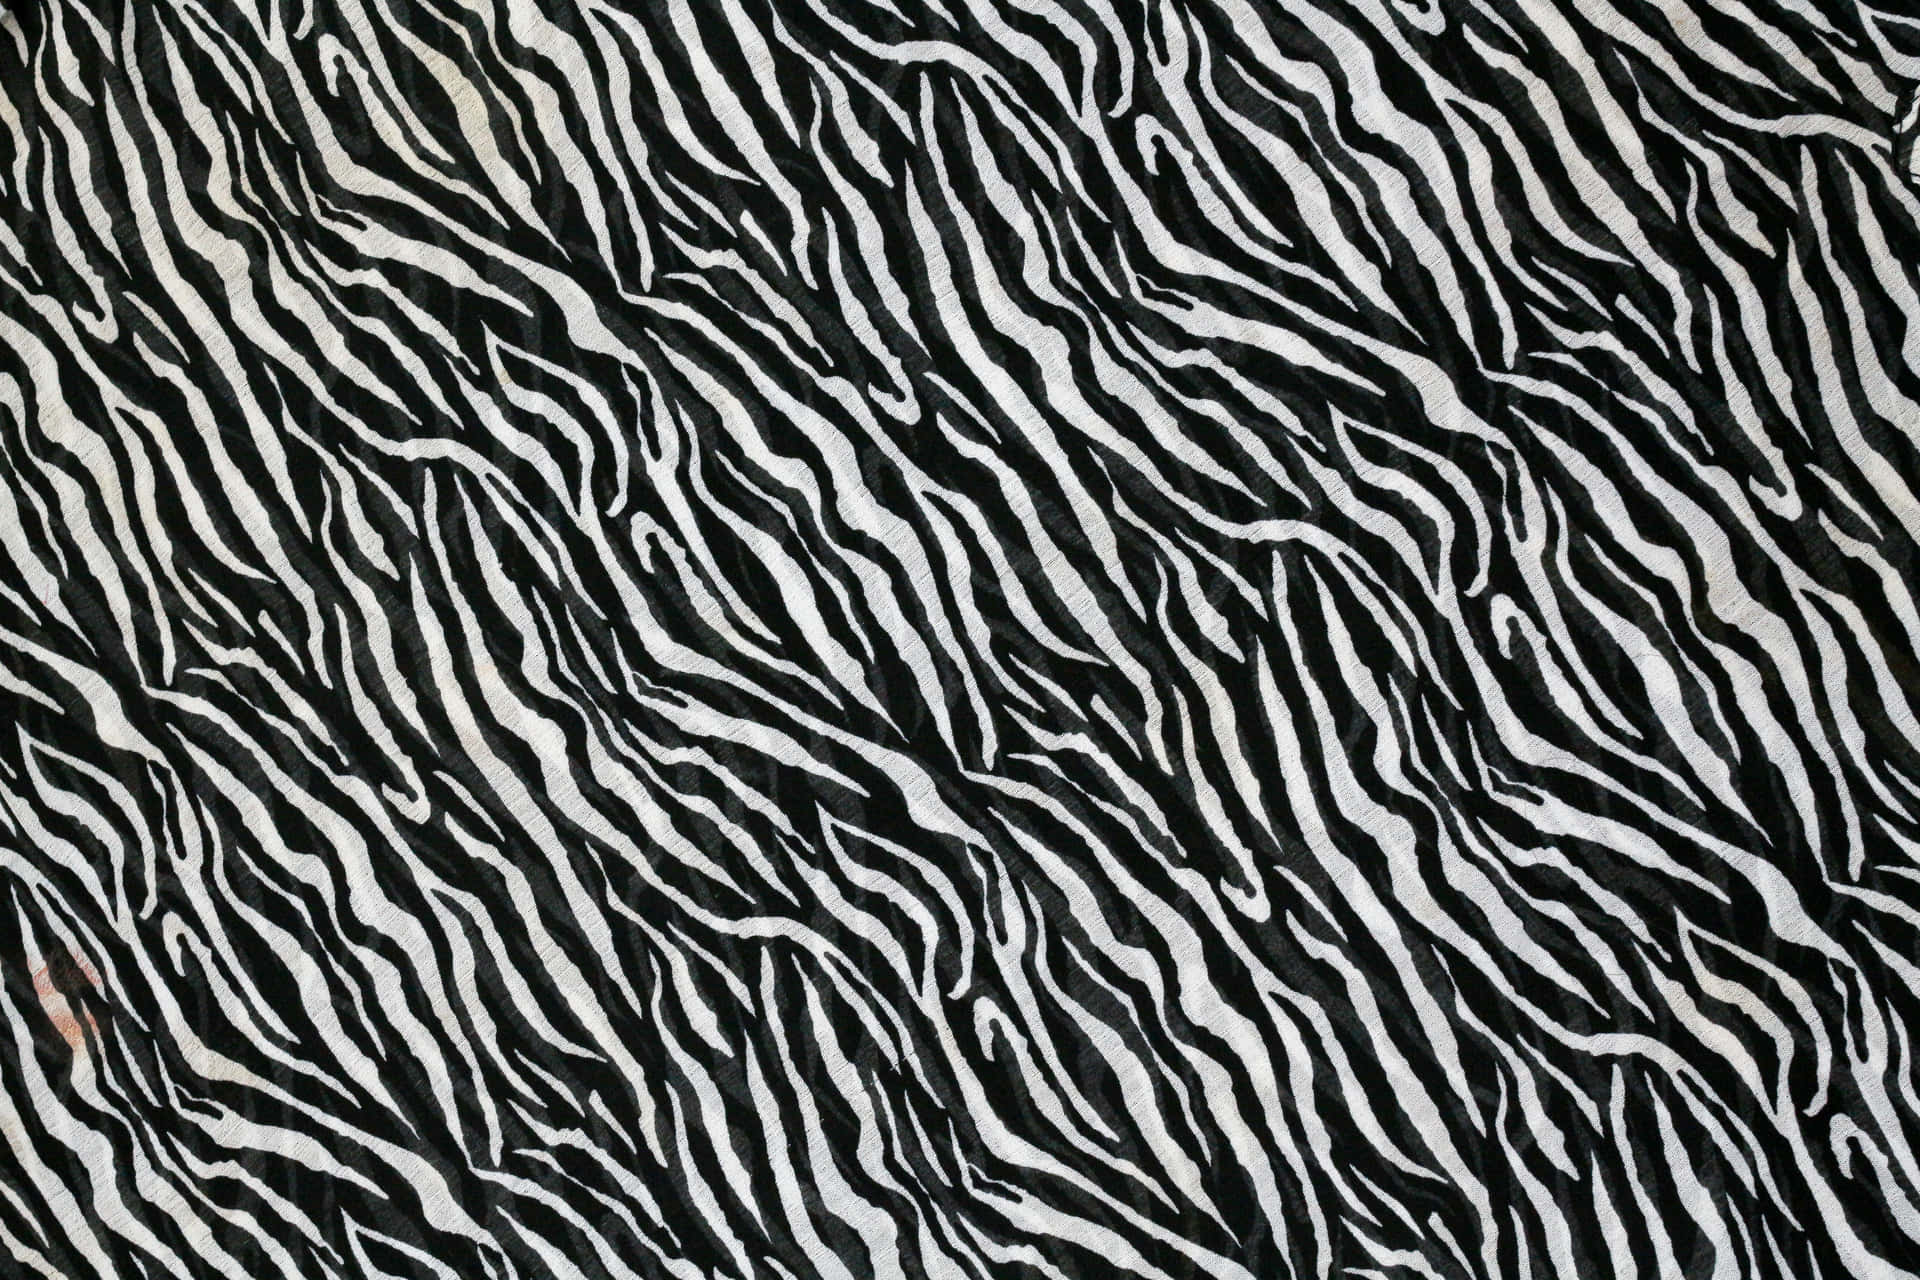 A Close Up Of A Black And White Zebra Print Fabric Wallpaper